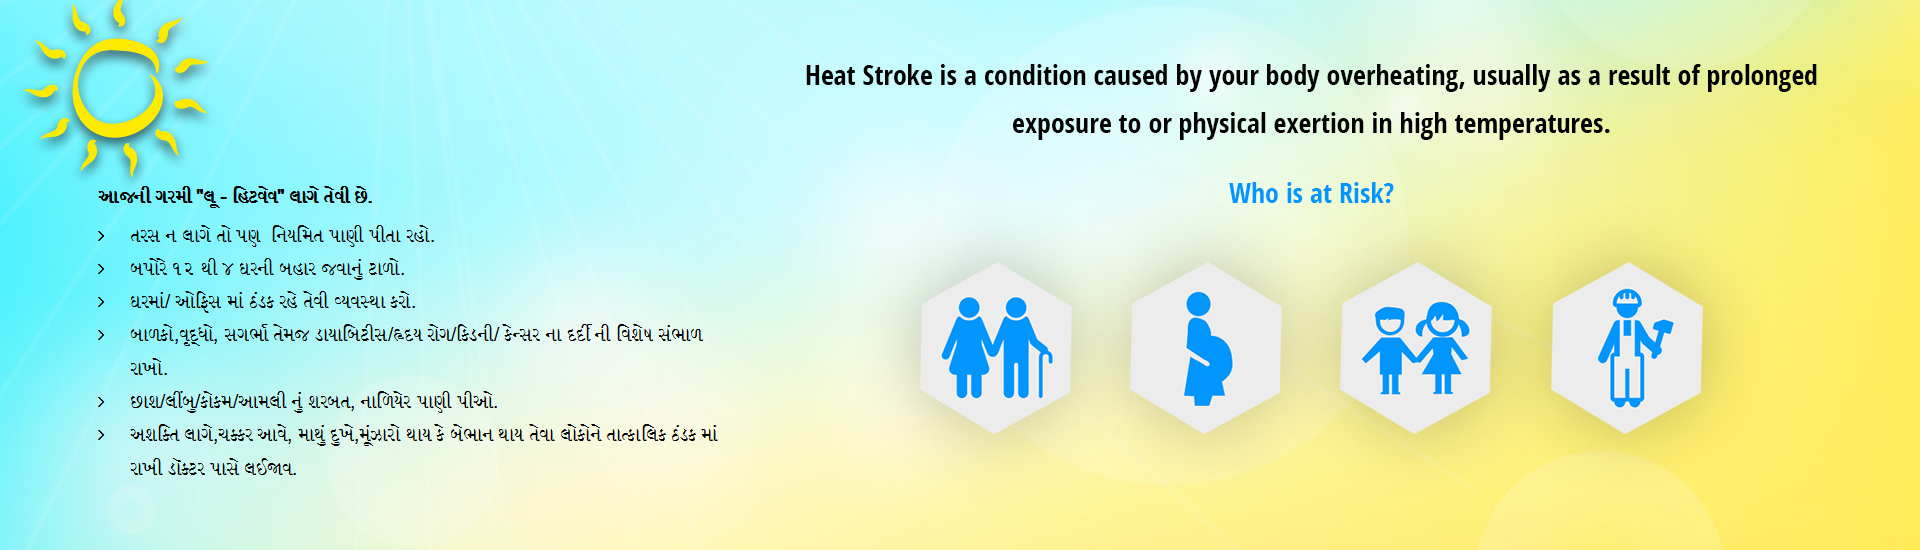 Heatstroke effects & Prevention - Surat Municipal Corporation